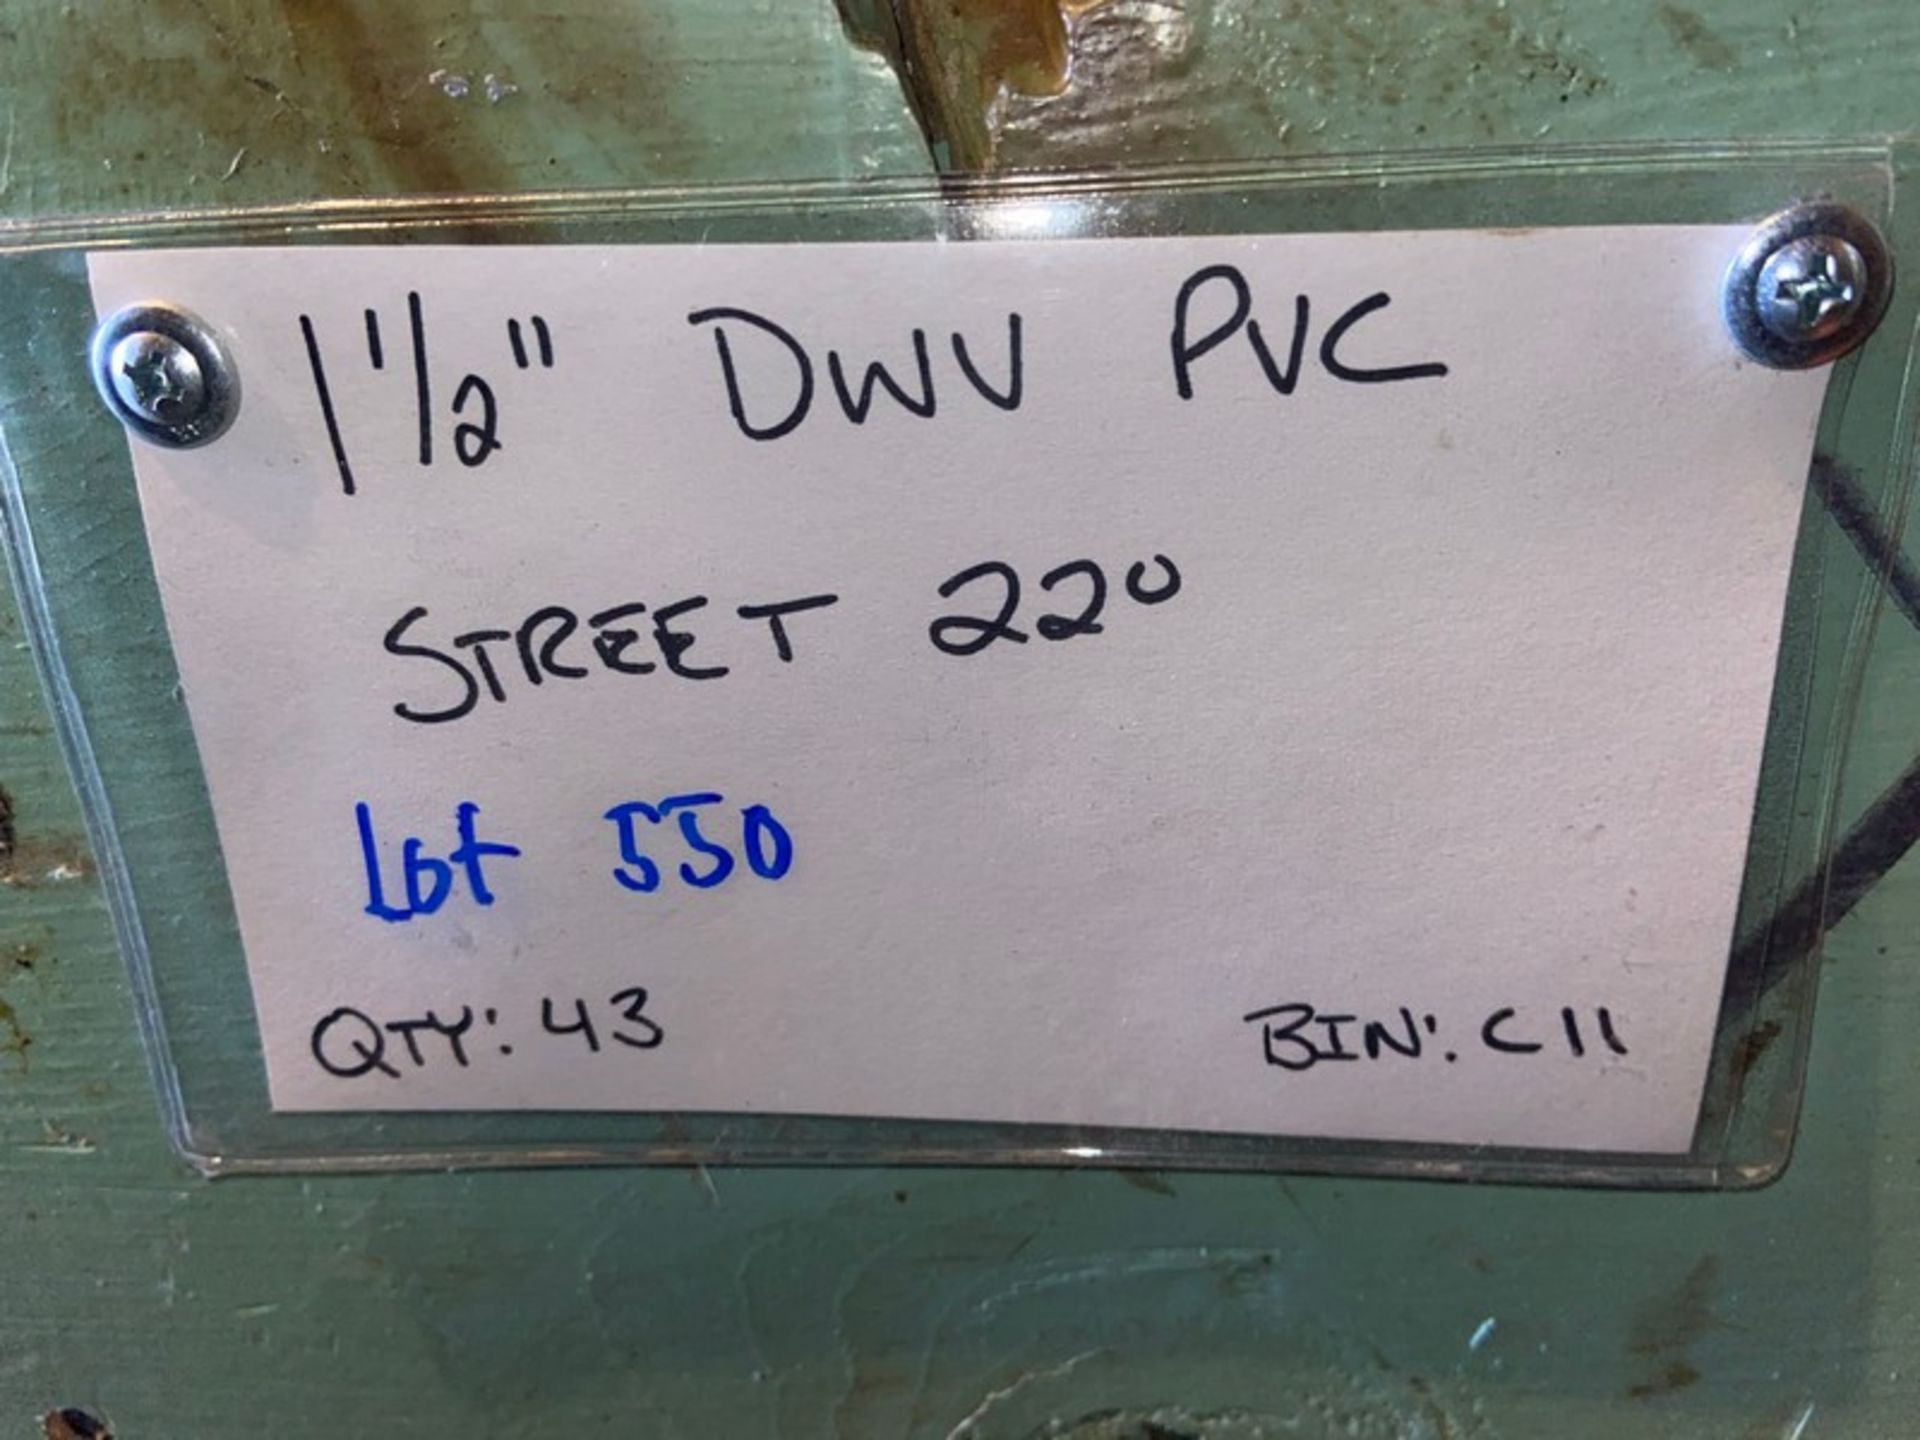 (43) 1 1/2 DWC PVC STREET 22’ (Bin:C11)(LOCATED IN MONROEVILLE, PA) - Bild 4 aus 4